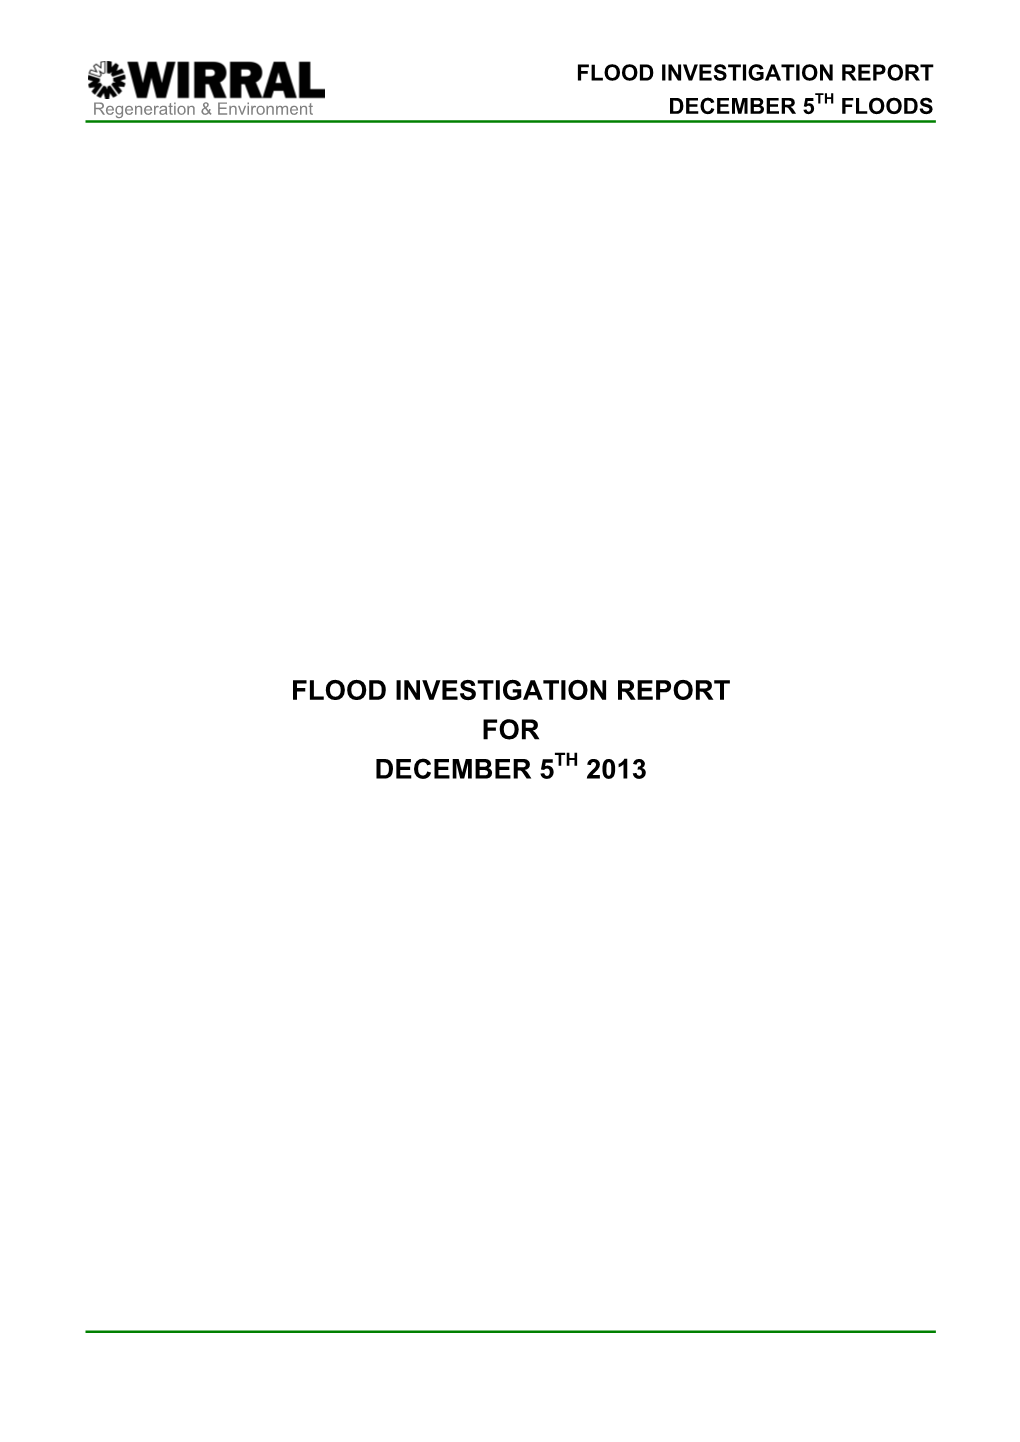 Flood Investigation Report for December 5Th 2013